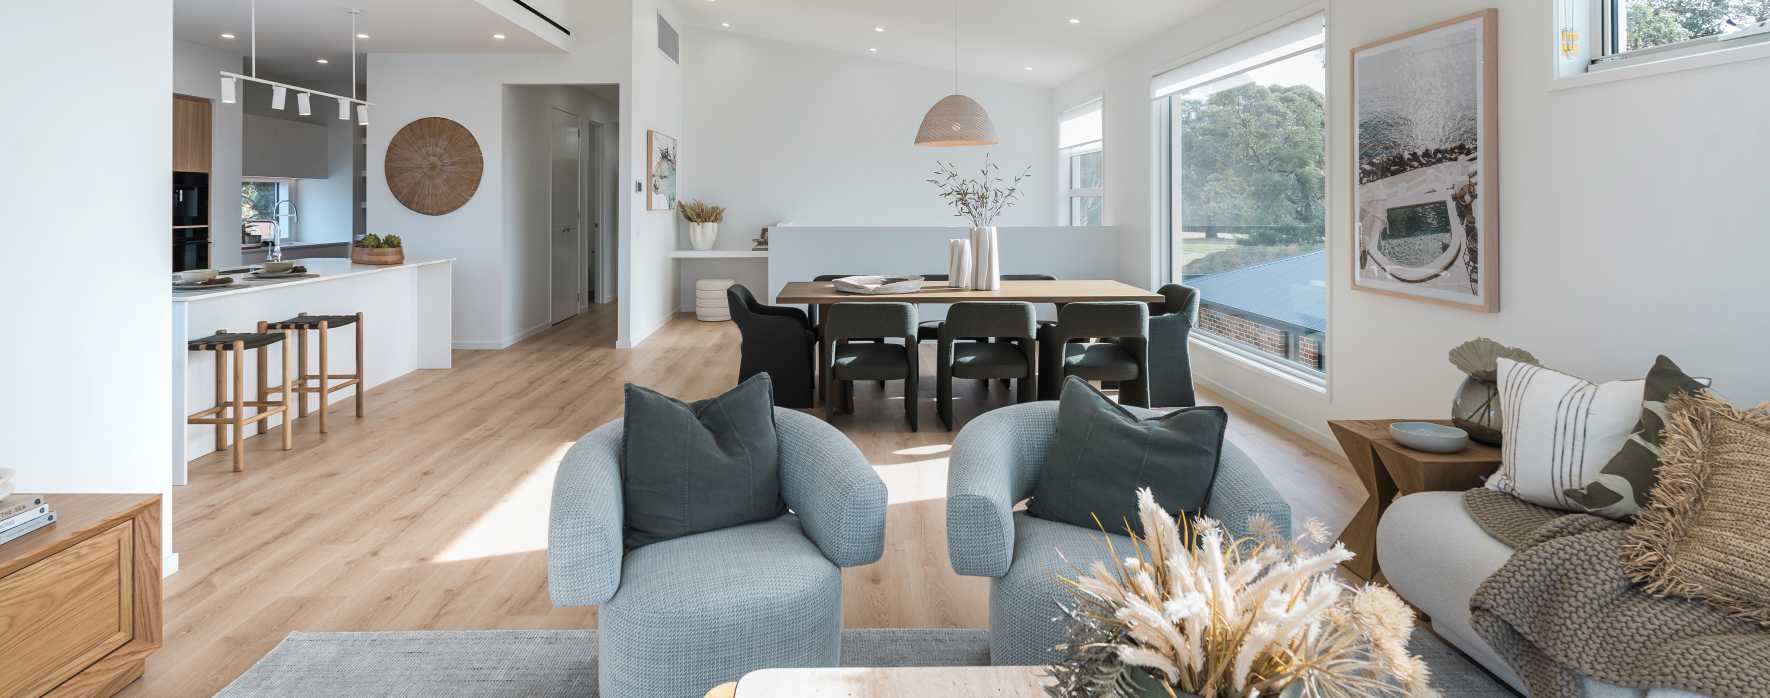 bellavista-30-double-storey-house-design-living-room